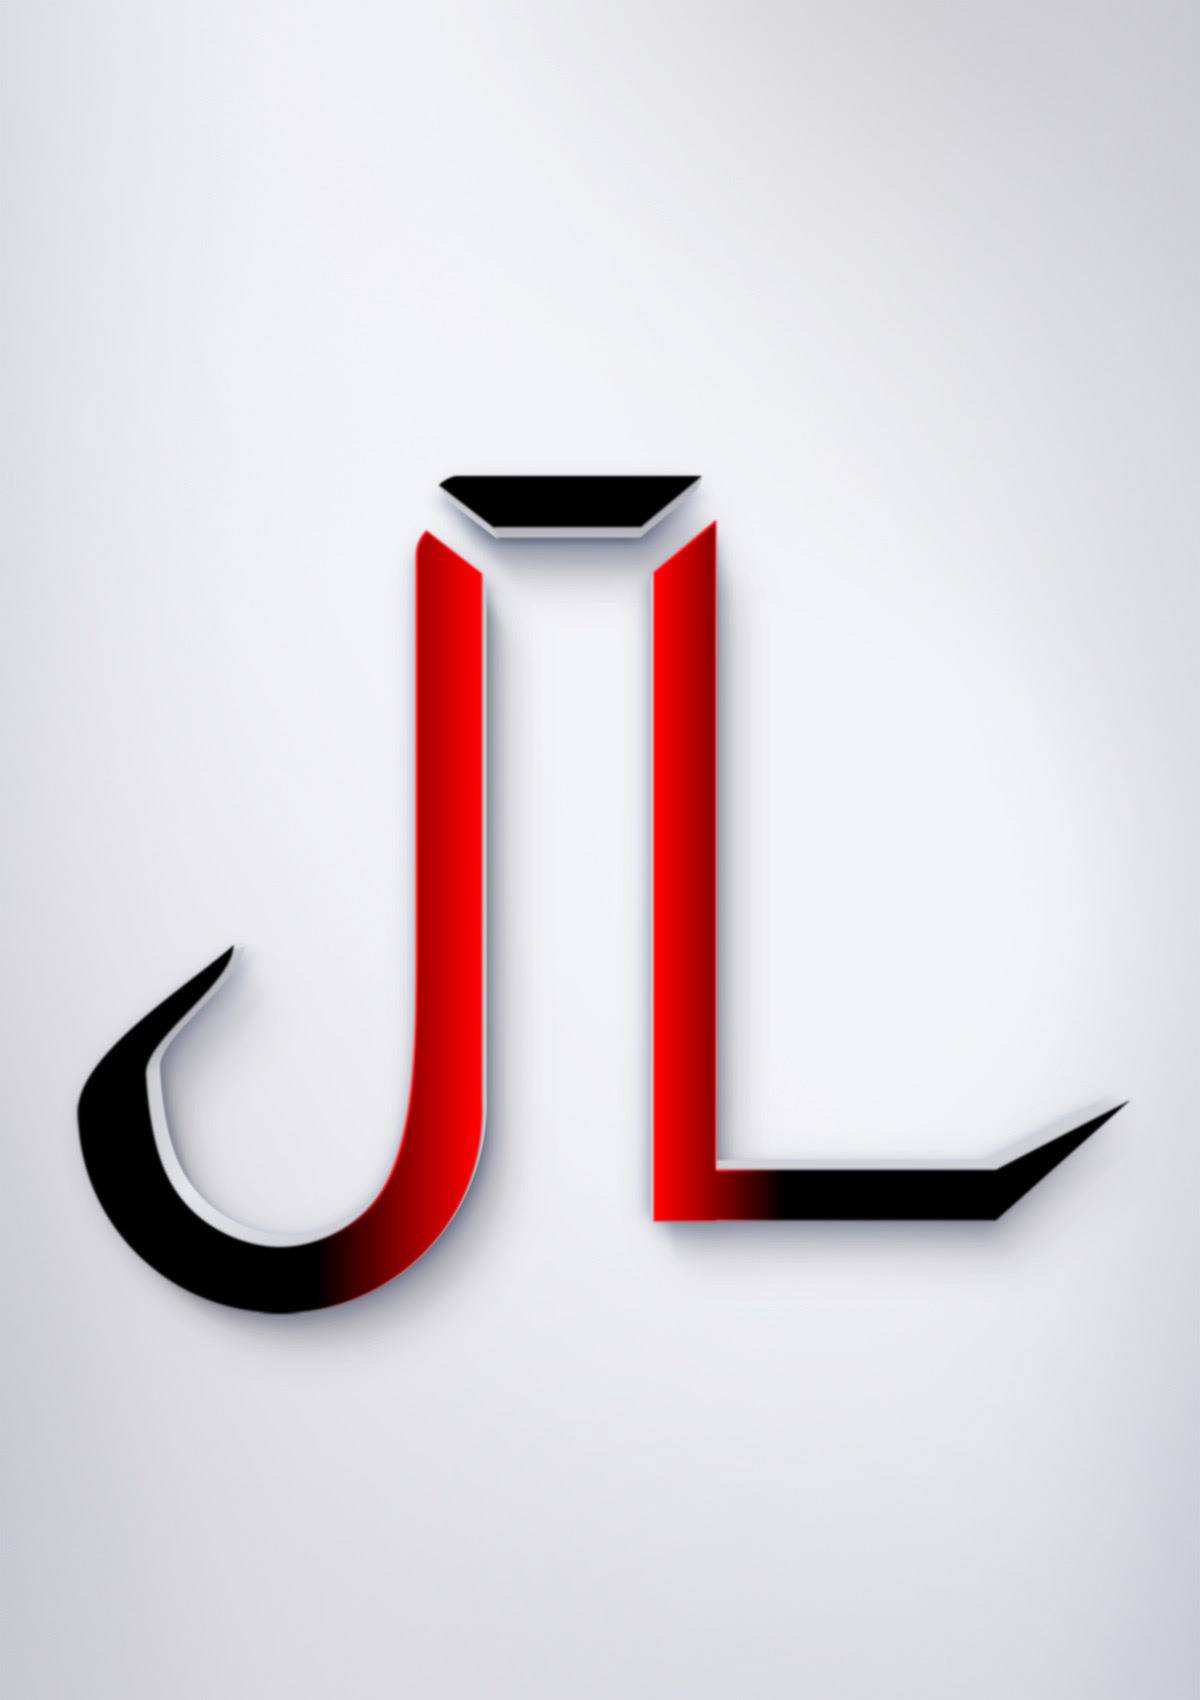 Jl logo Black and White Stock Photos & Images - Alamy